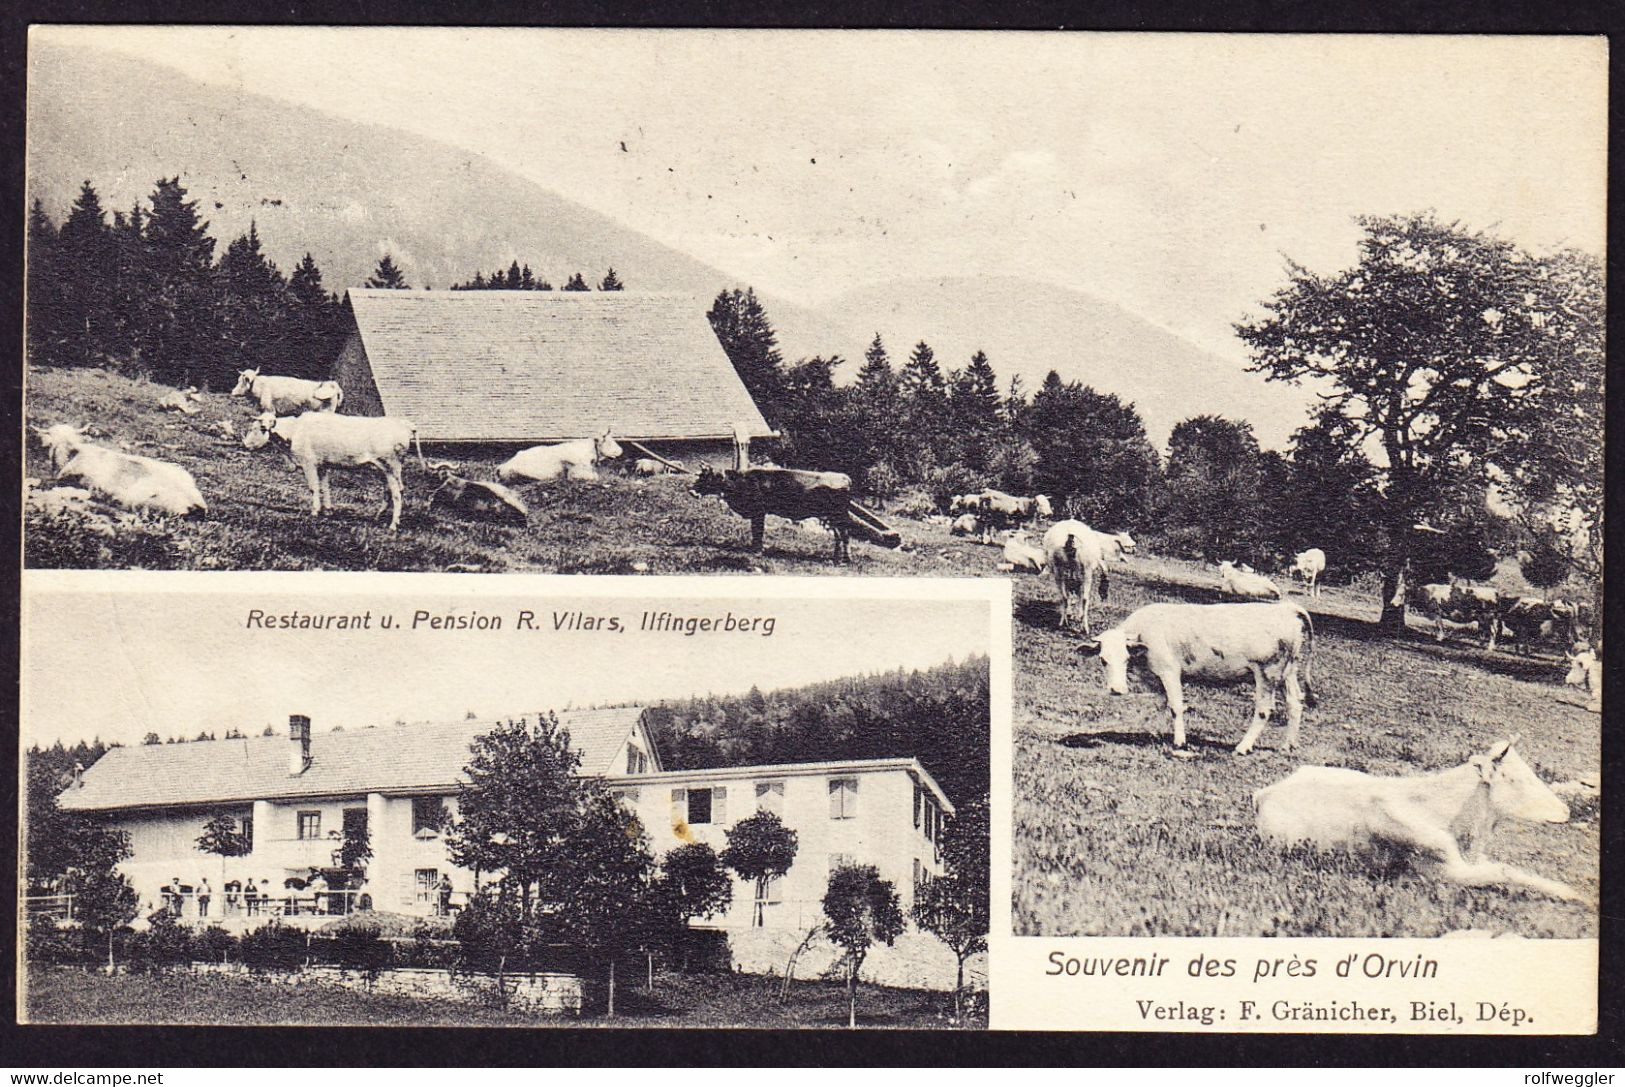 1912 Gelaufene AK: Souvenir Des Près D'Orvin. Links Unten Eckbug. Restaurant Und Pension Vilars, Ilfingerberg. Stab- - Orvin